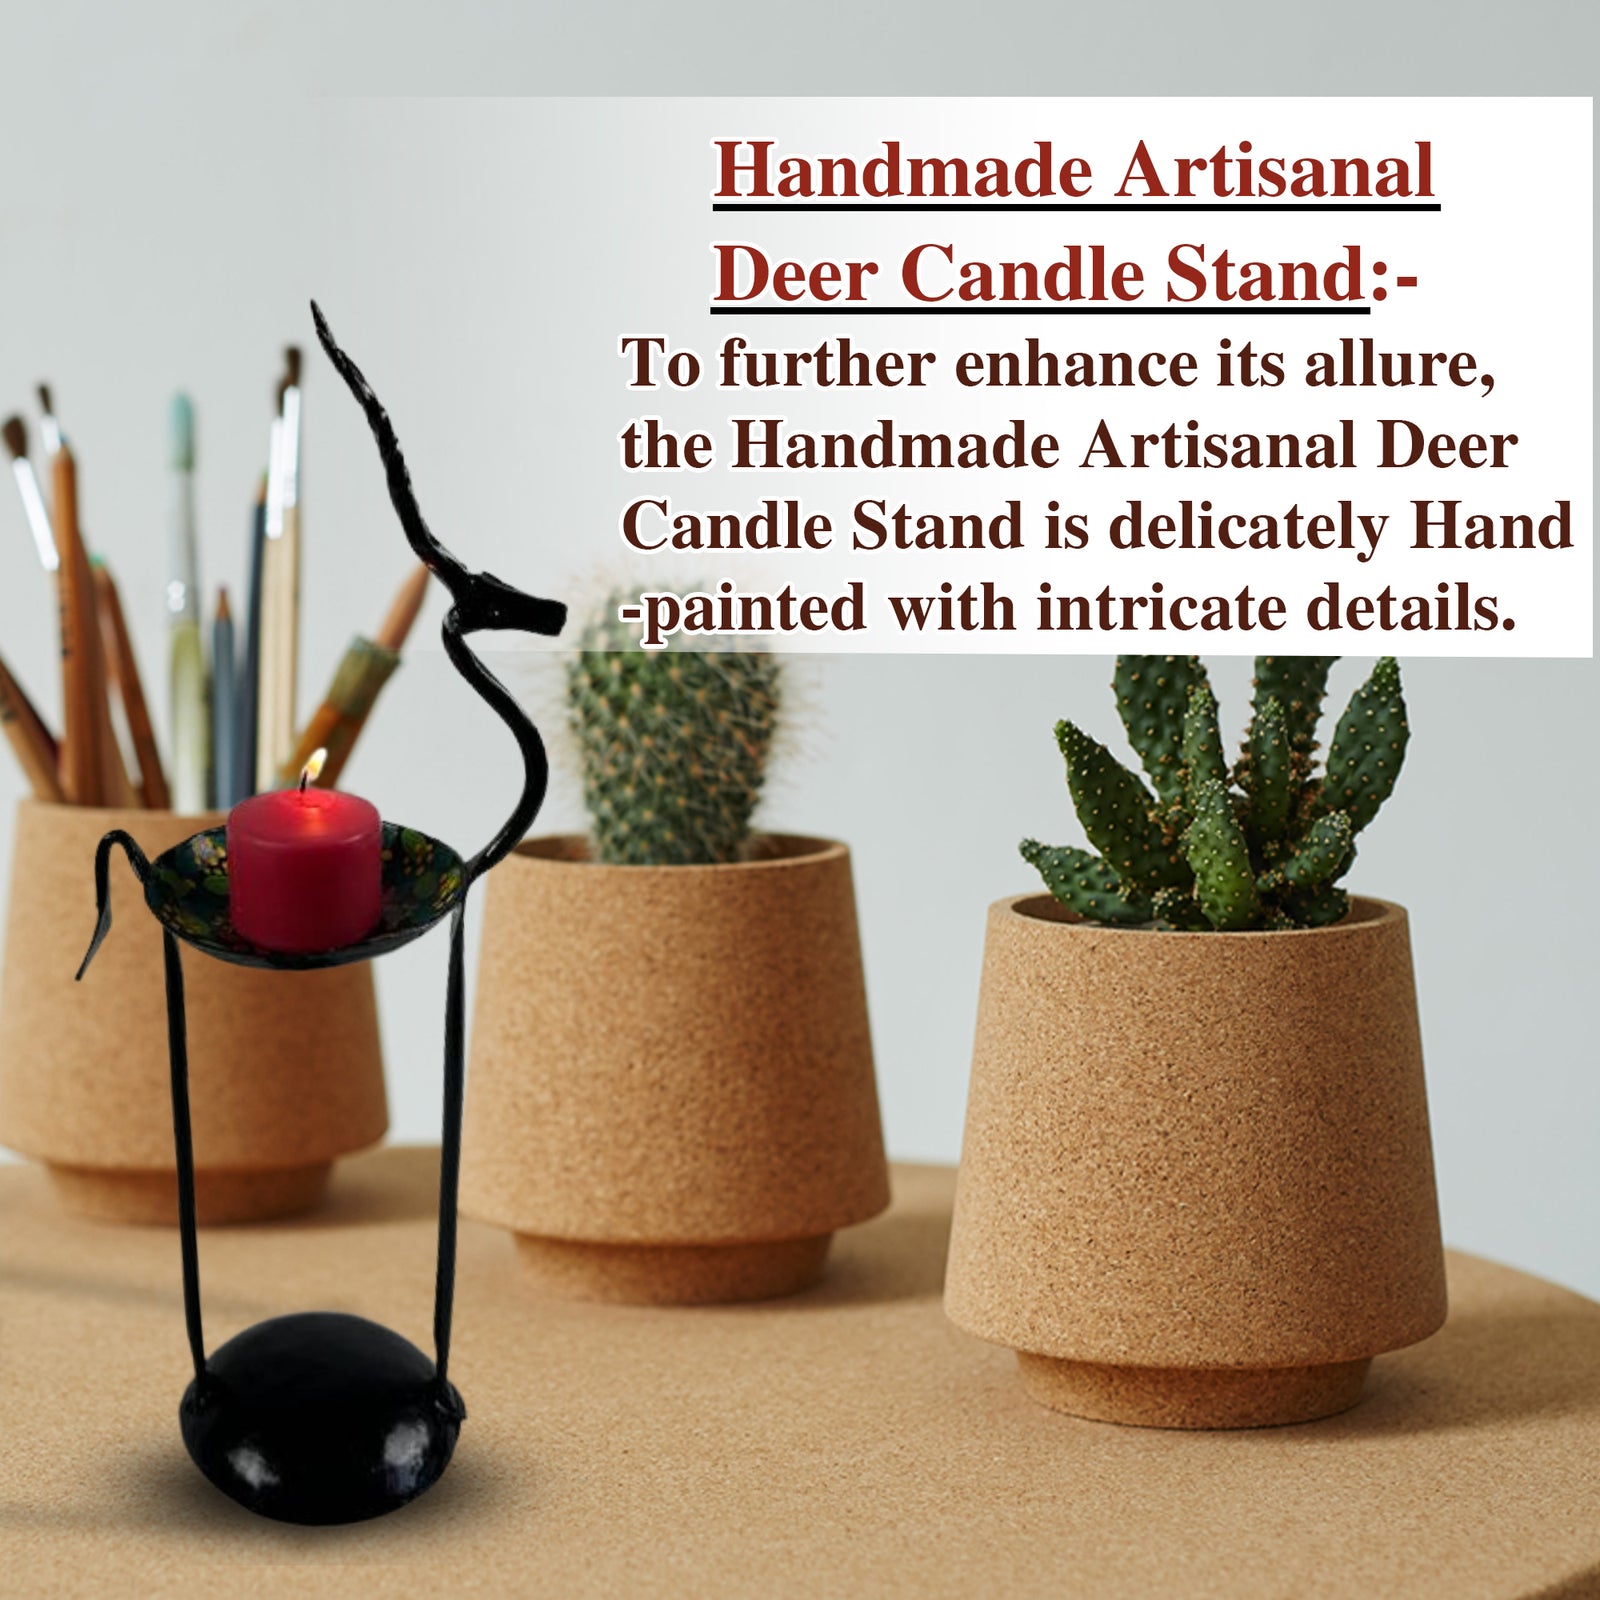 Handmade Artisanal Deer Candle Stand